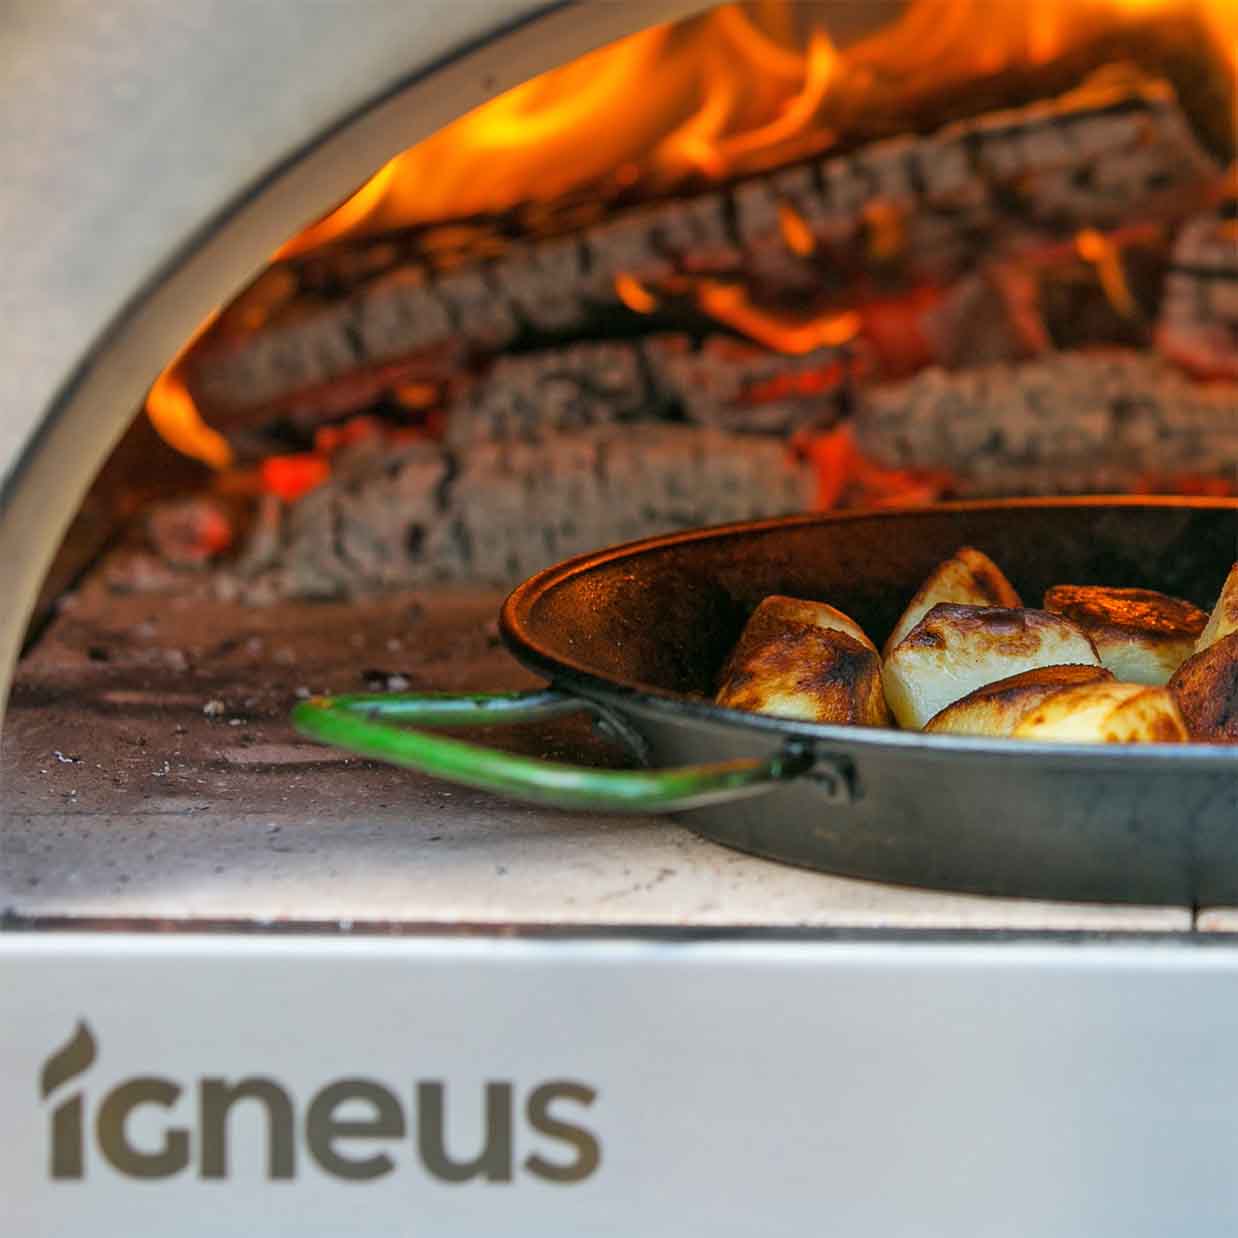 Igneus Bambino wood fired garden pizza oven